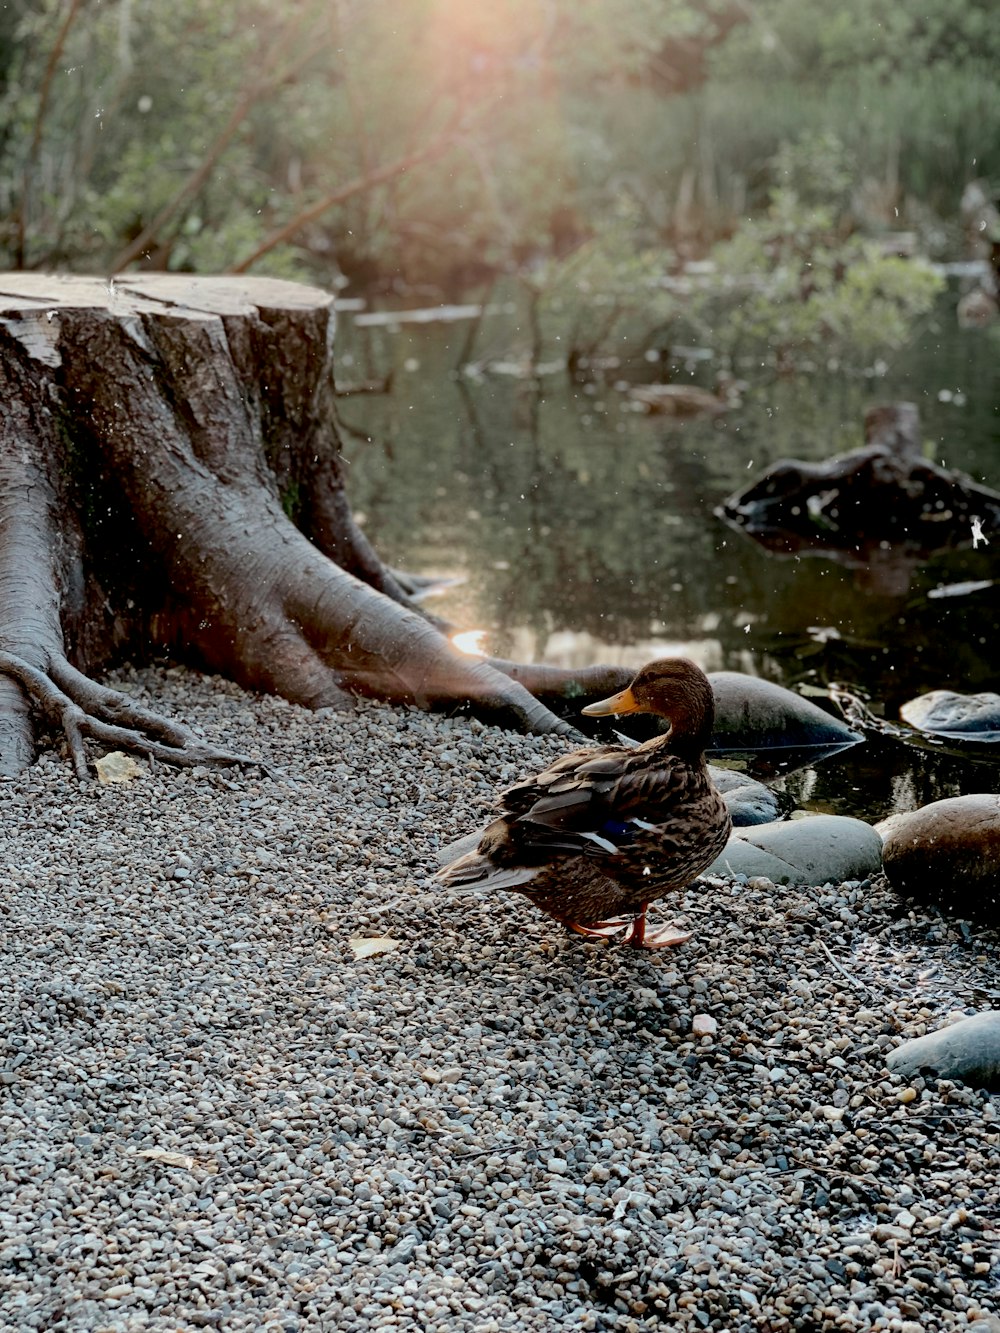 mallard duck on gravel ground near wood stomp and body of water